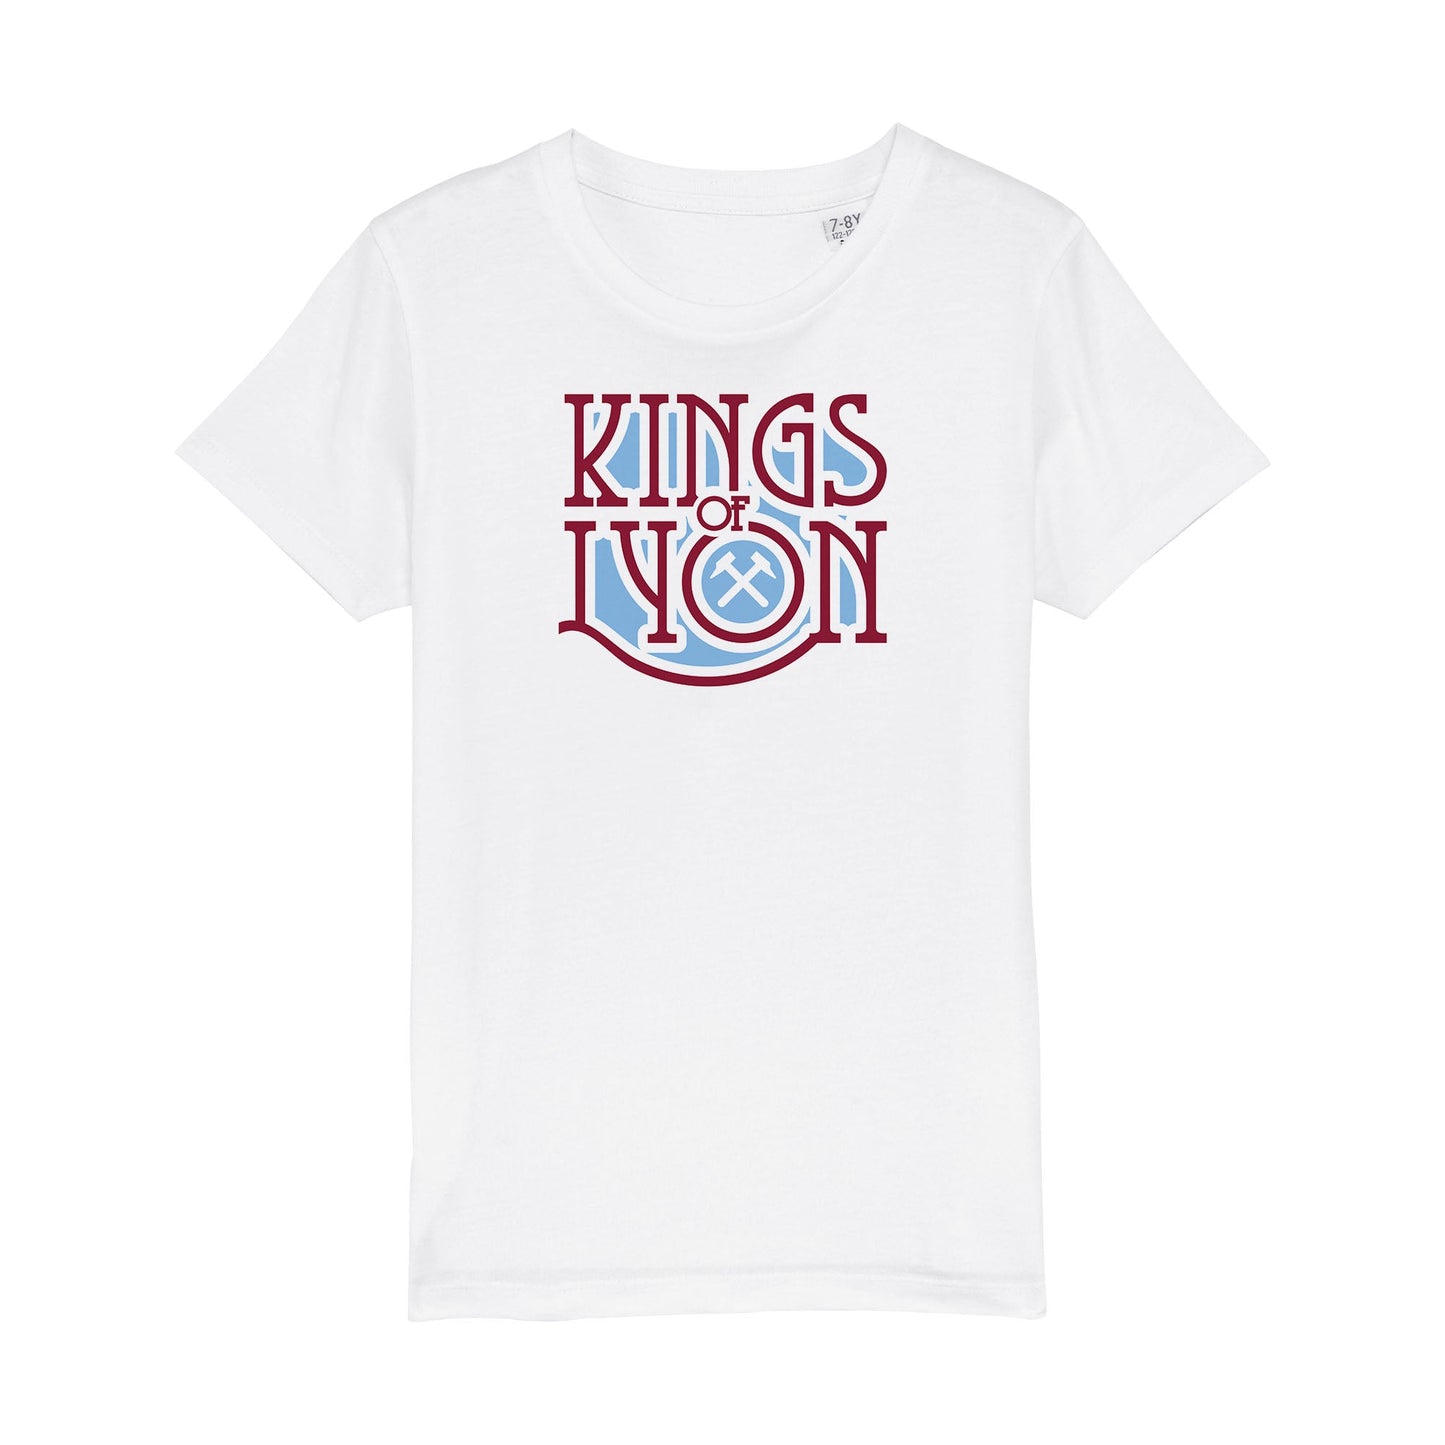 Kings Of Lyon Kids Tee